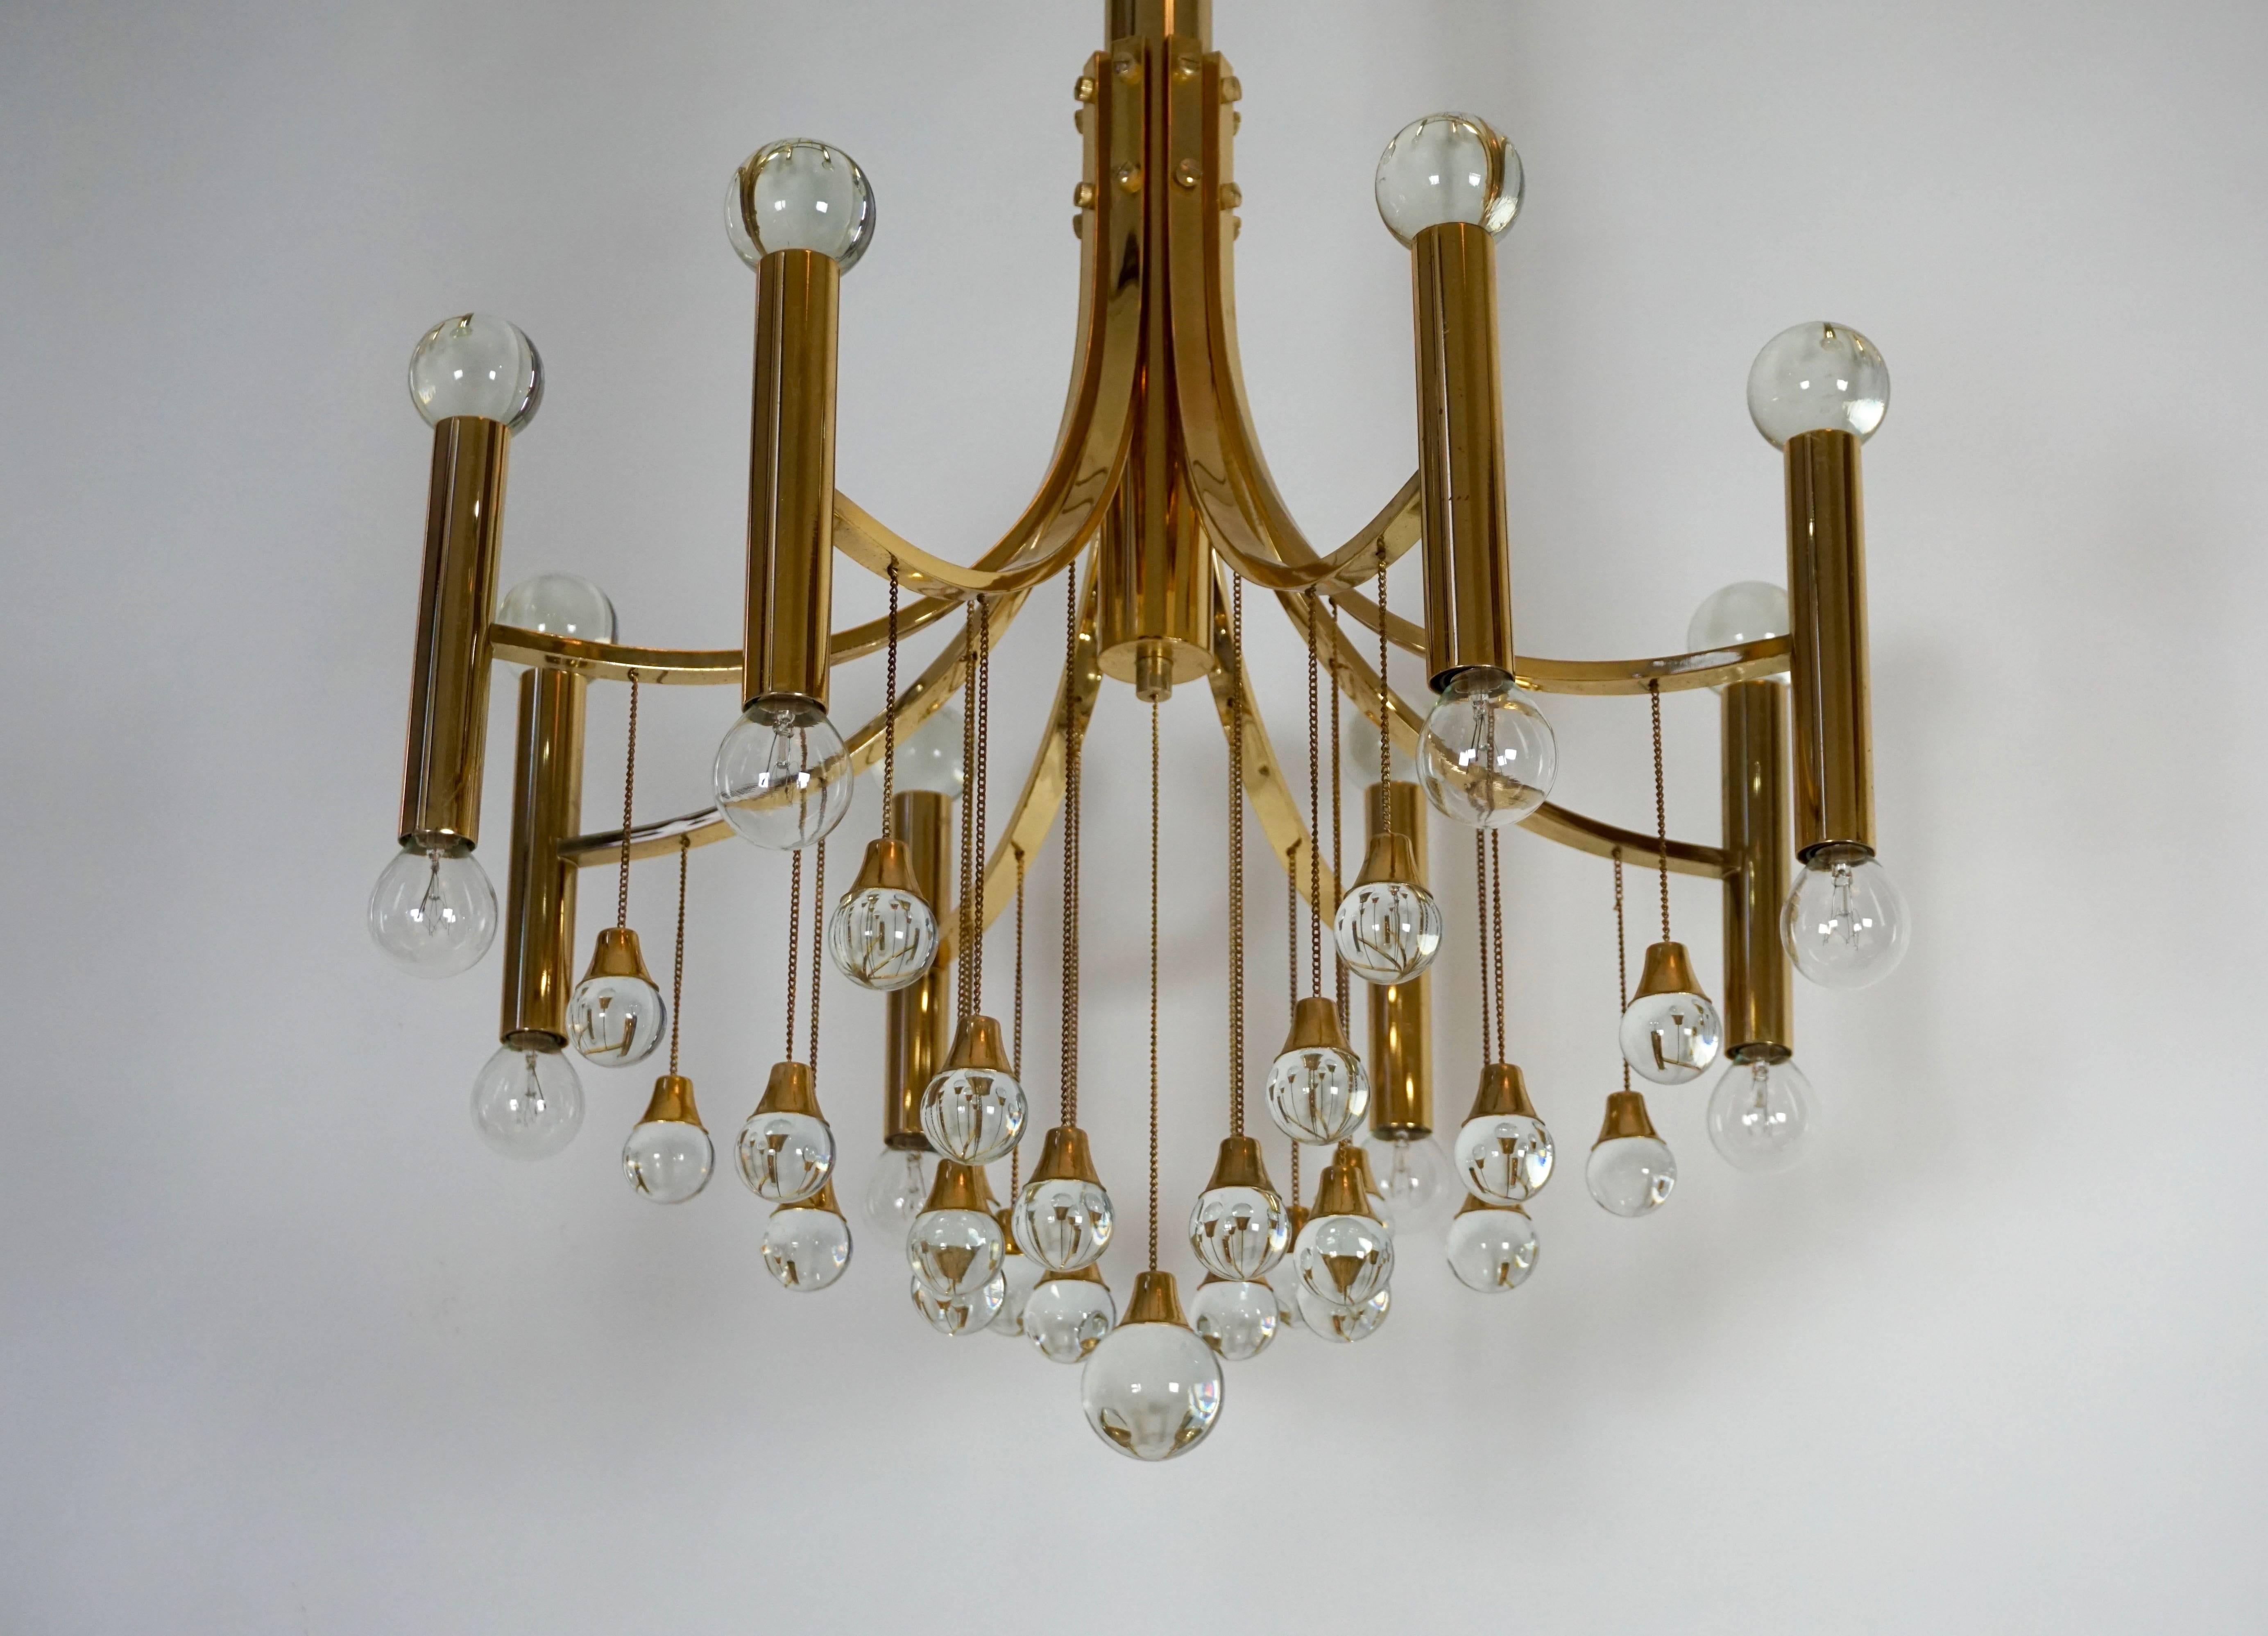 Italian brass and glass chandelier by Sciolari.
Eight E14 bulbs.
Measures: Diameter 60 cm.
Height 110 cm.